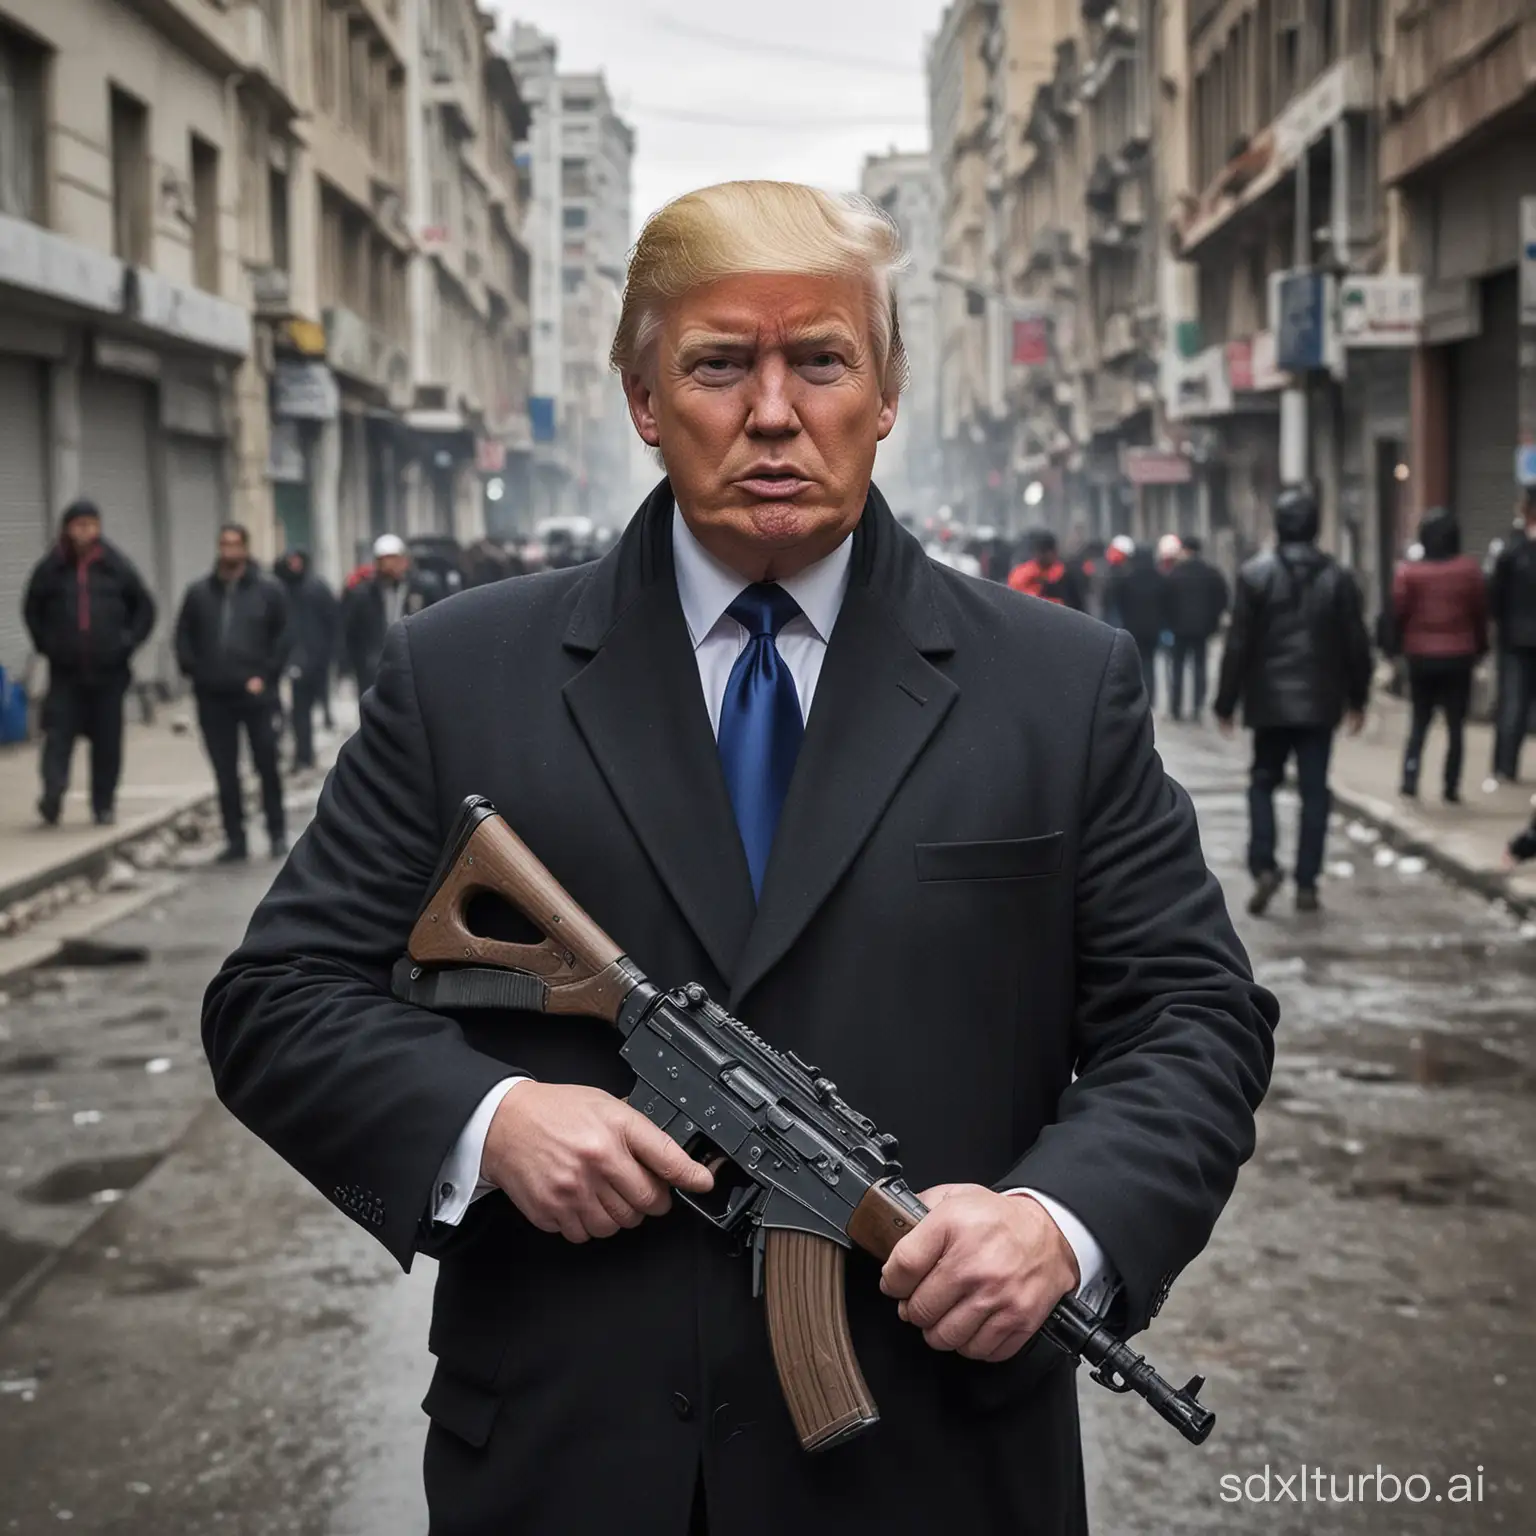 Donald-Trump-Lookalike-Holding-AK47-on-Urban-Street